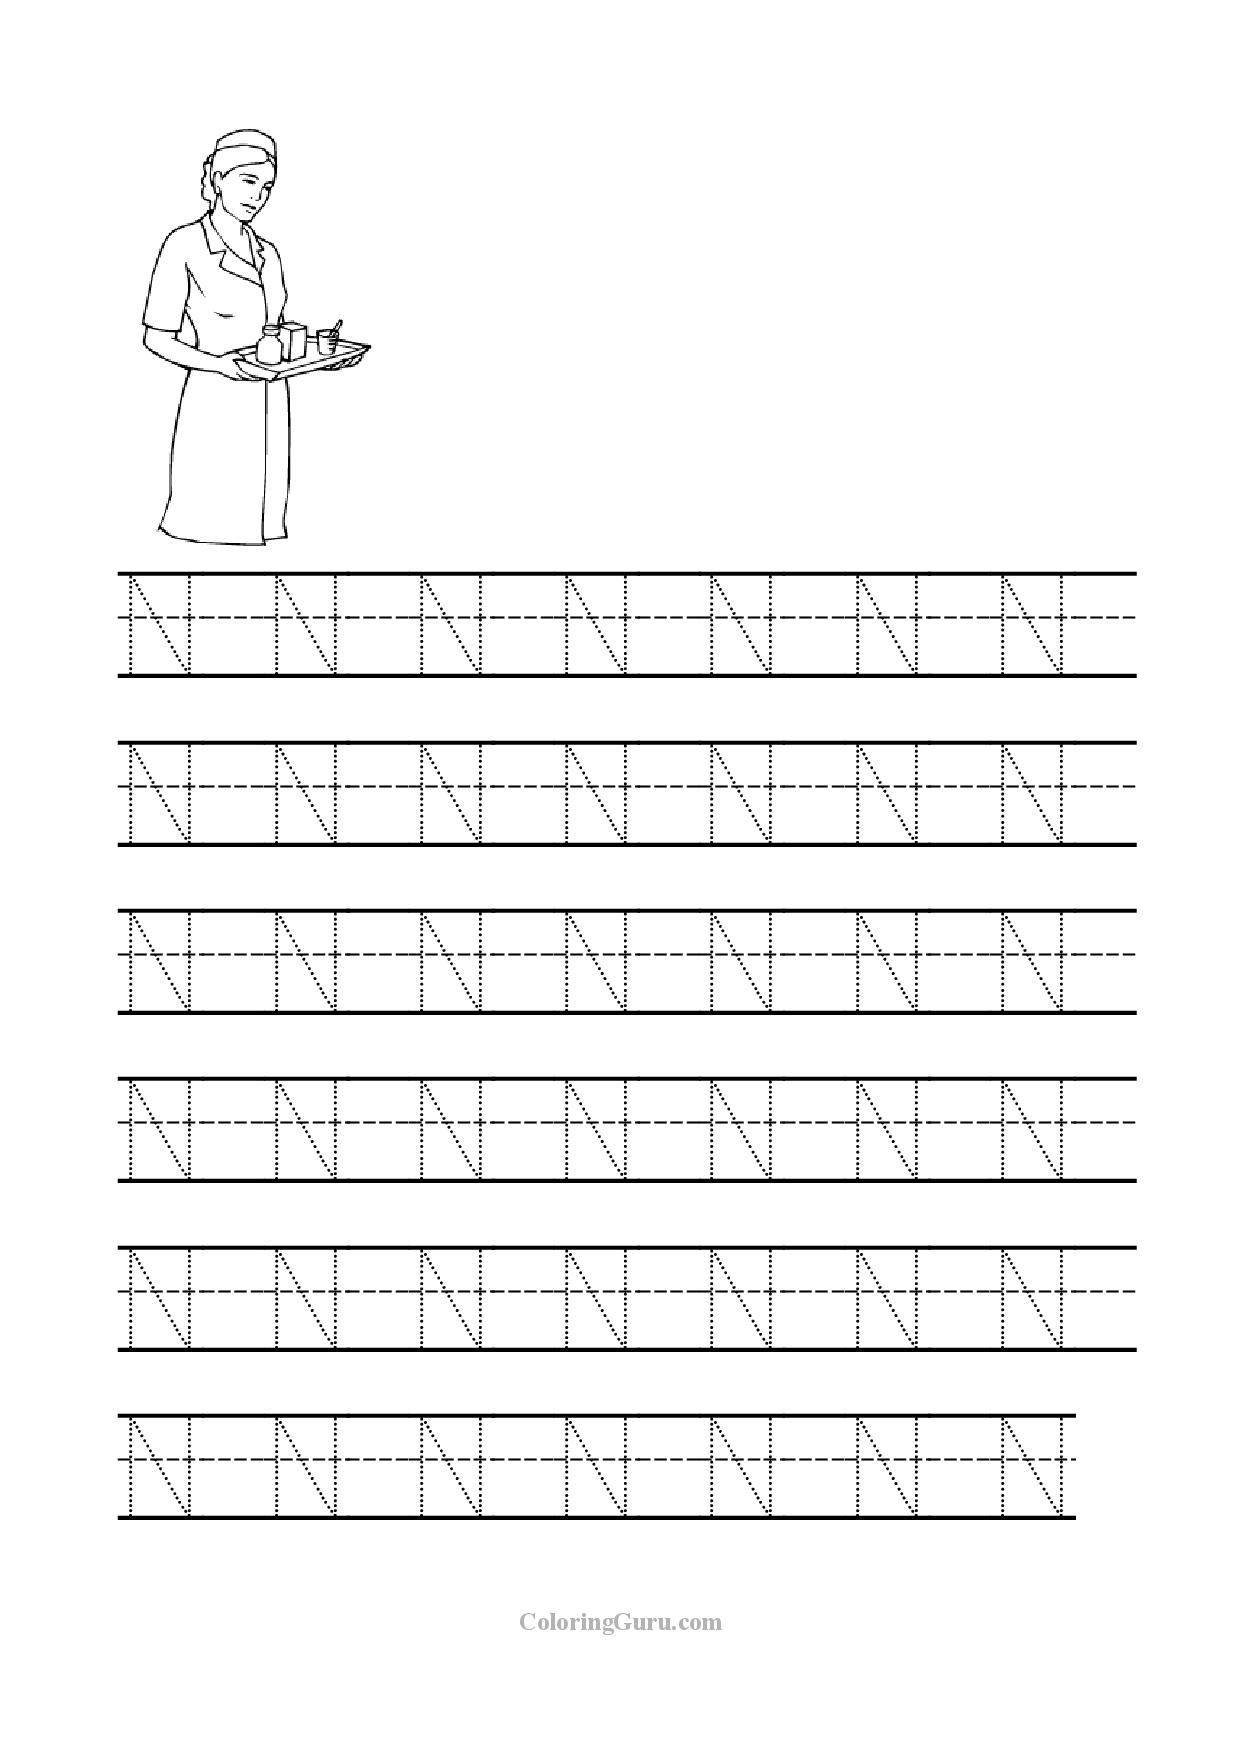 Free Printable Tracing Letter N Worksheets For Preschool pertaining to Letter Nn Worksheets For Preschool